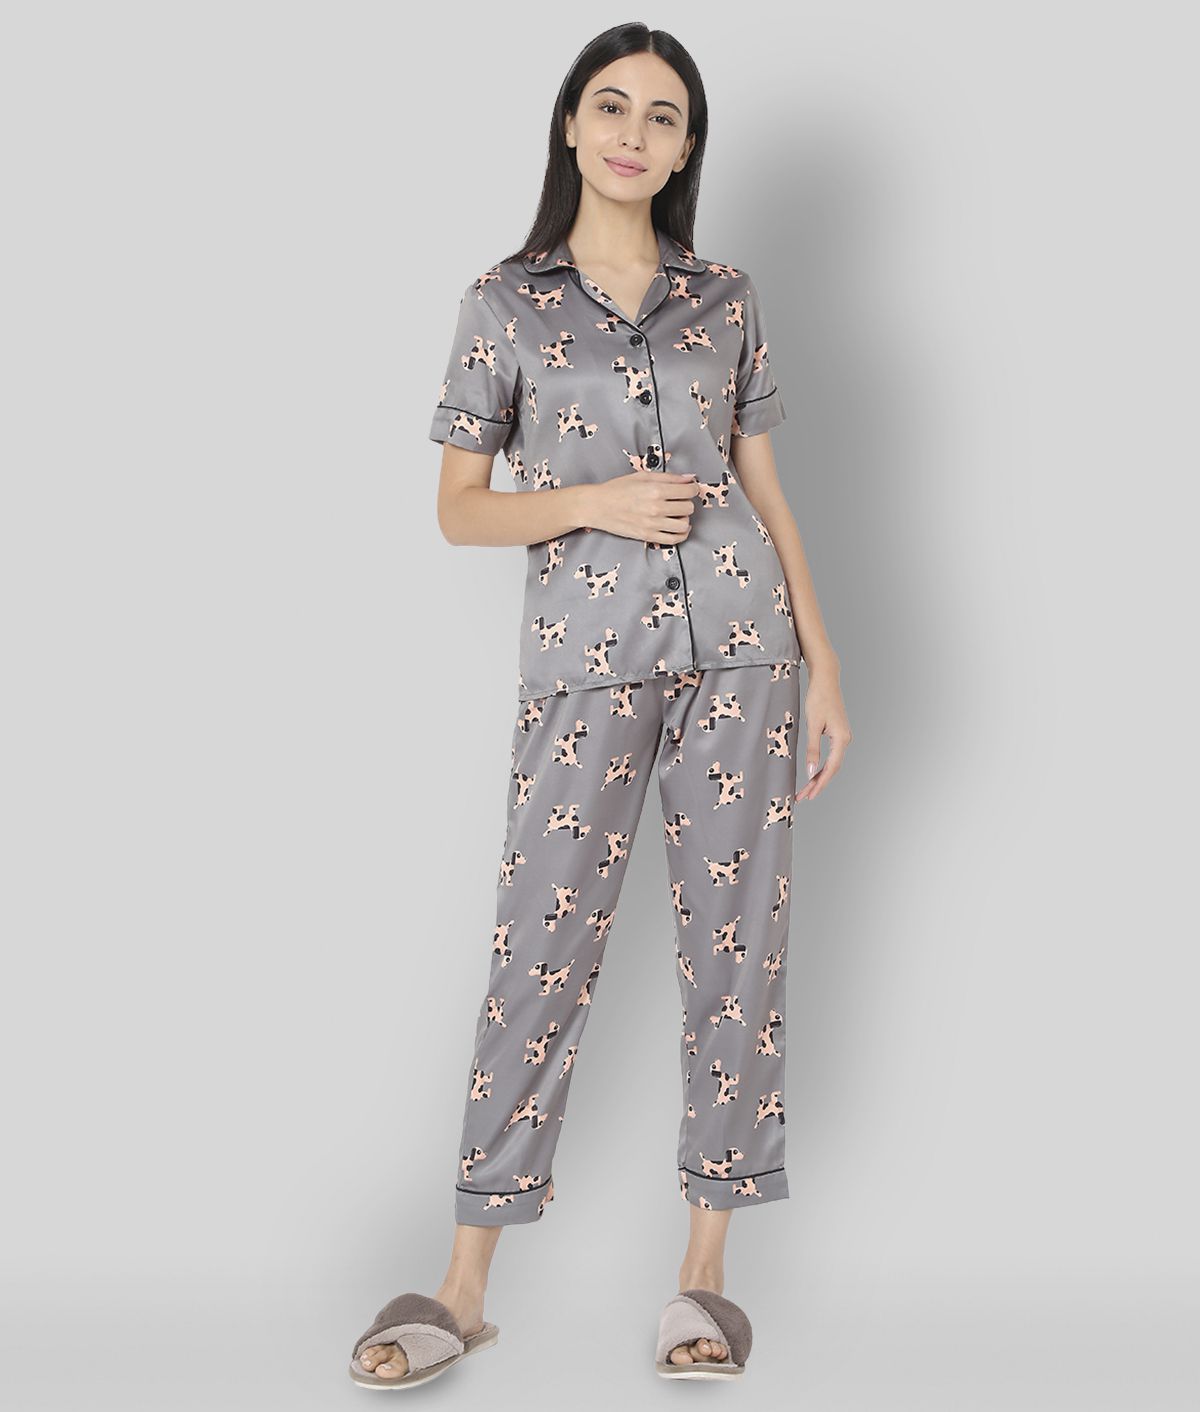     			Smarty Pants - Light Grey Satin Women's Nightwear Nightsuit Sets ( Pack of 1 )